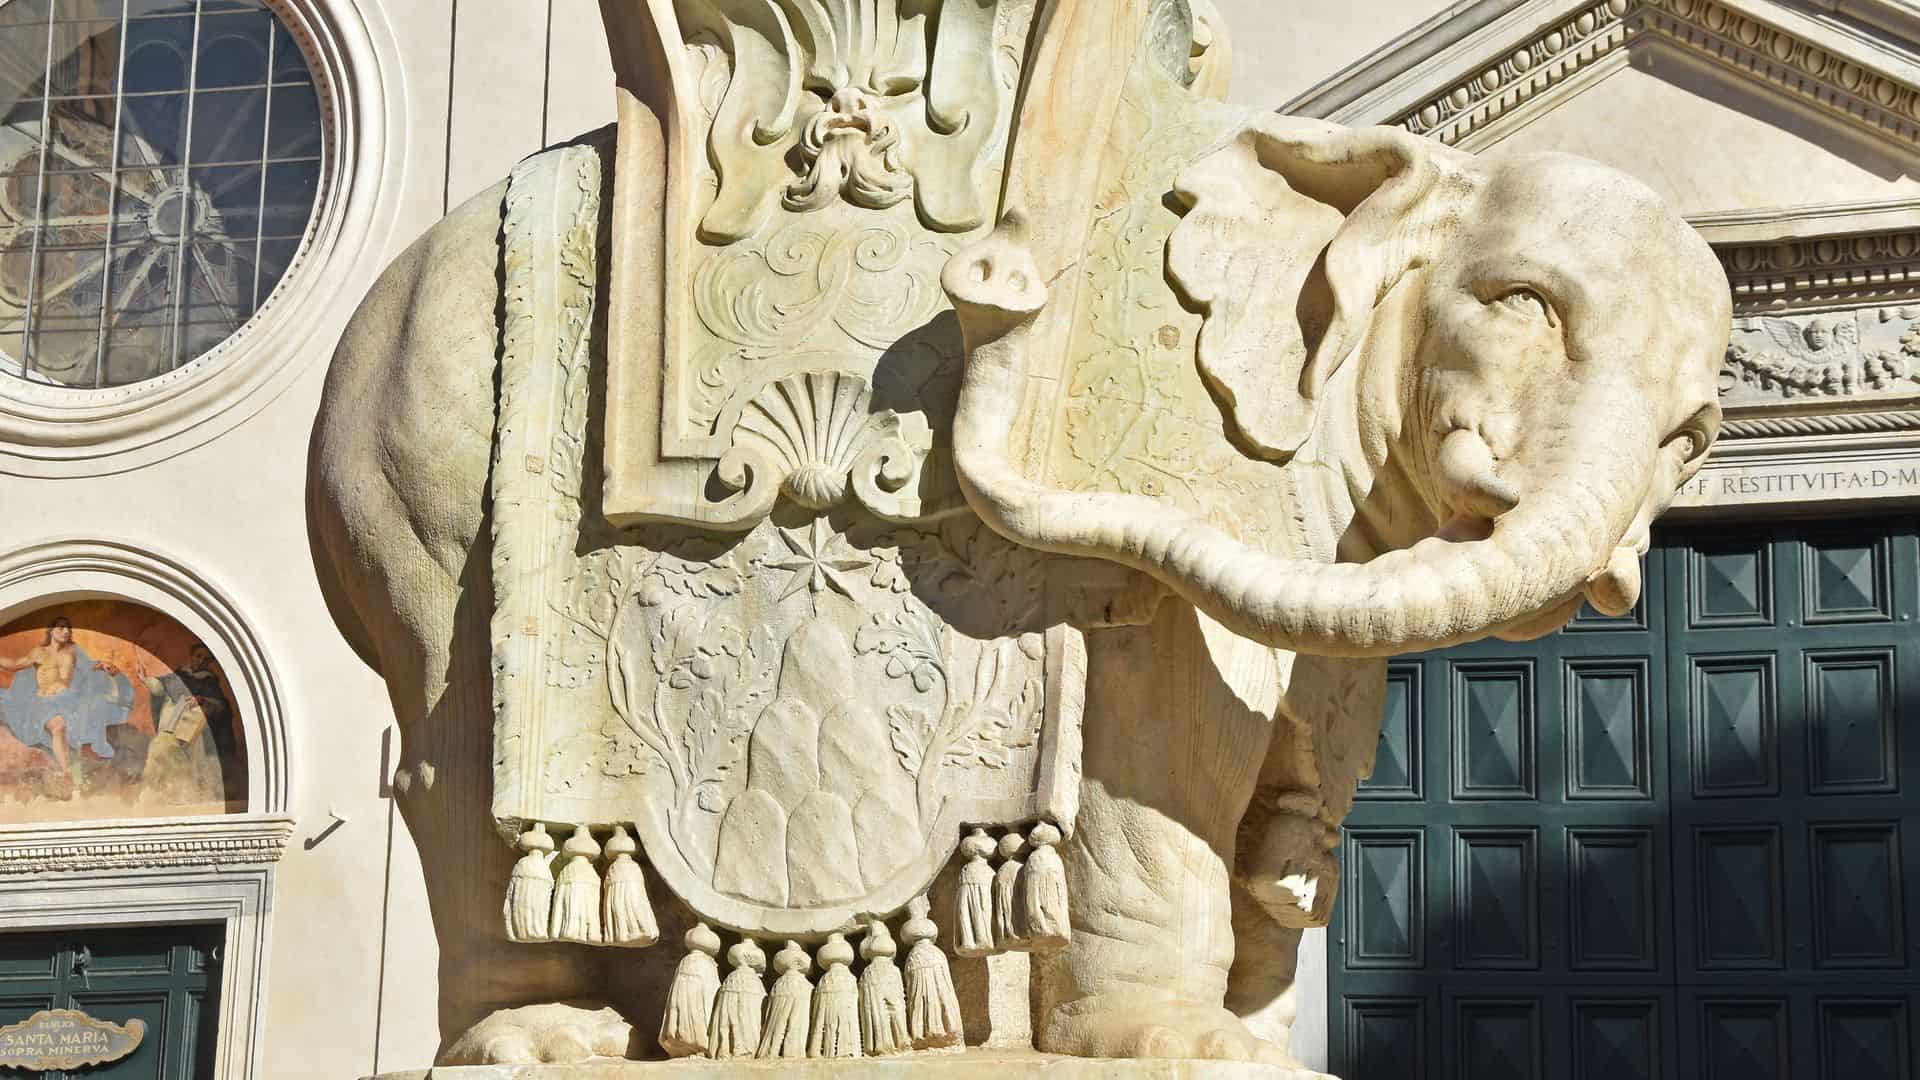 A close-up of Bernini's marble elephant at Piazza della Minerva.